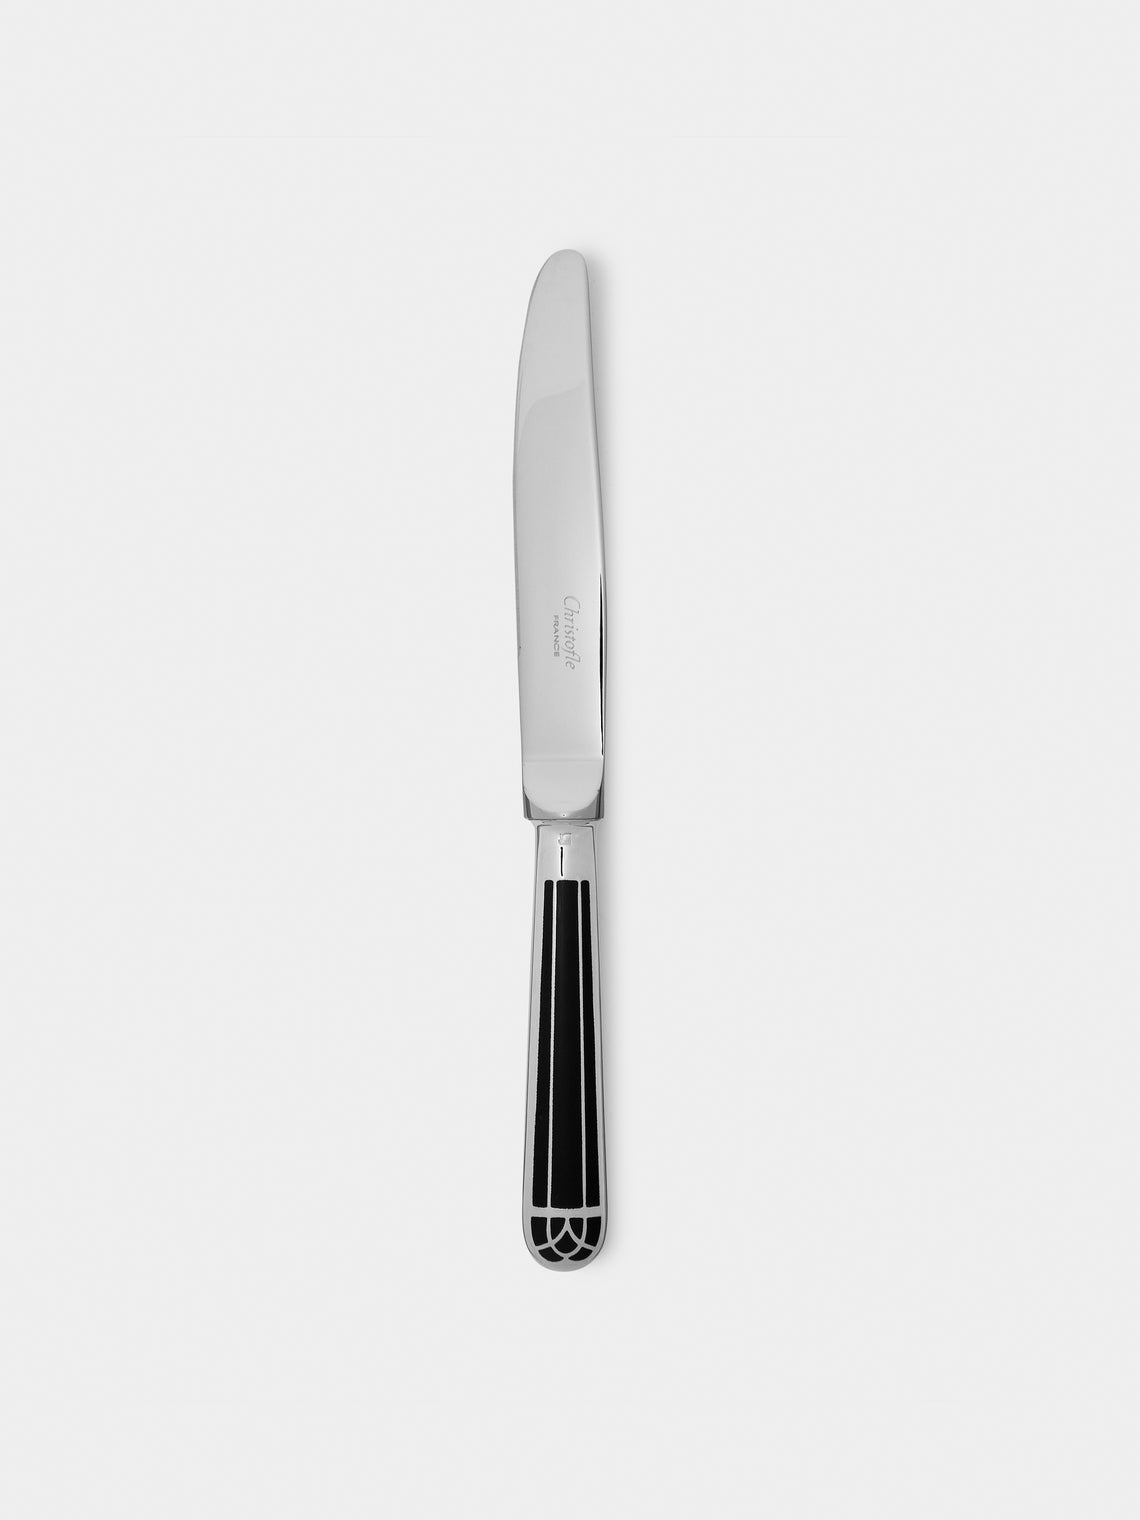 Christofle - Talisman Silver-Plated Dessert Knife - Silver - ABASK - 